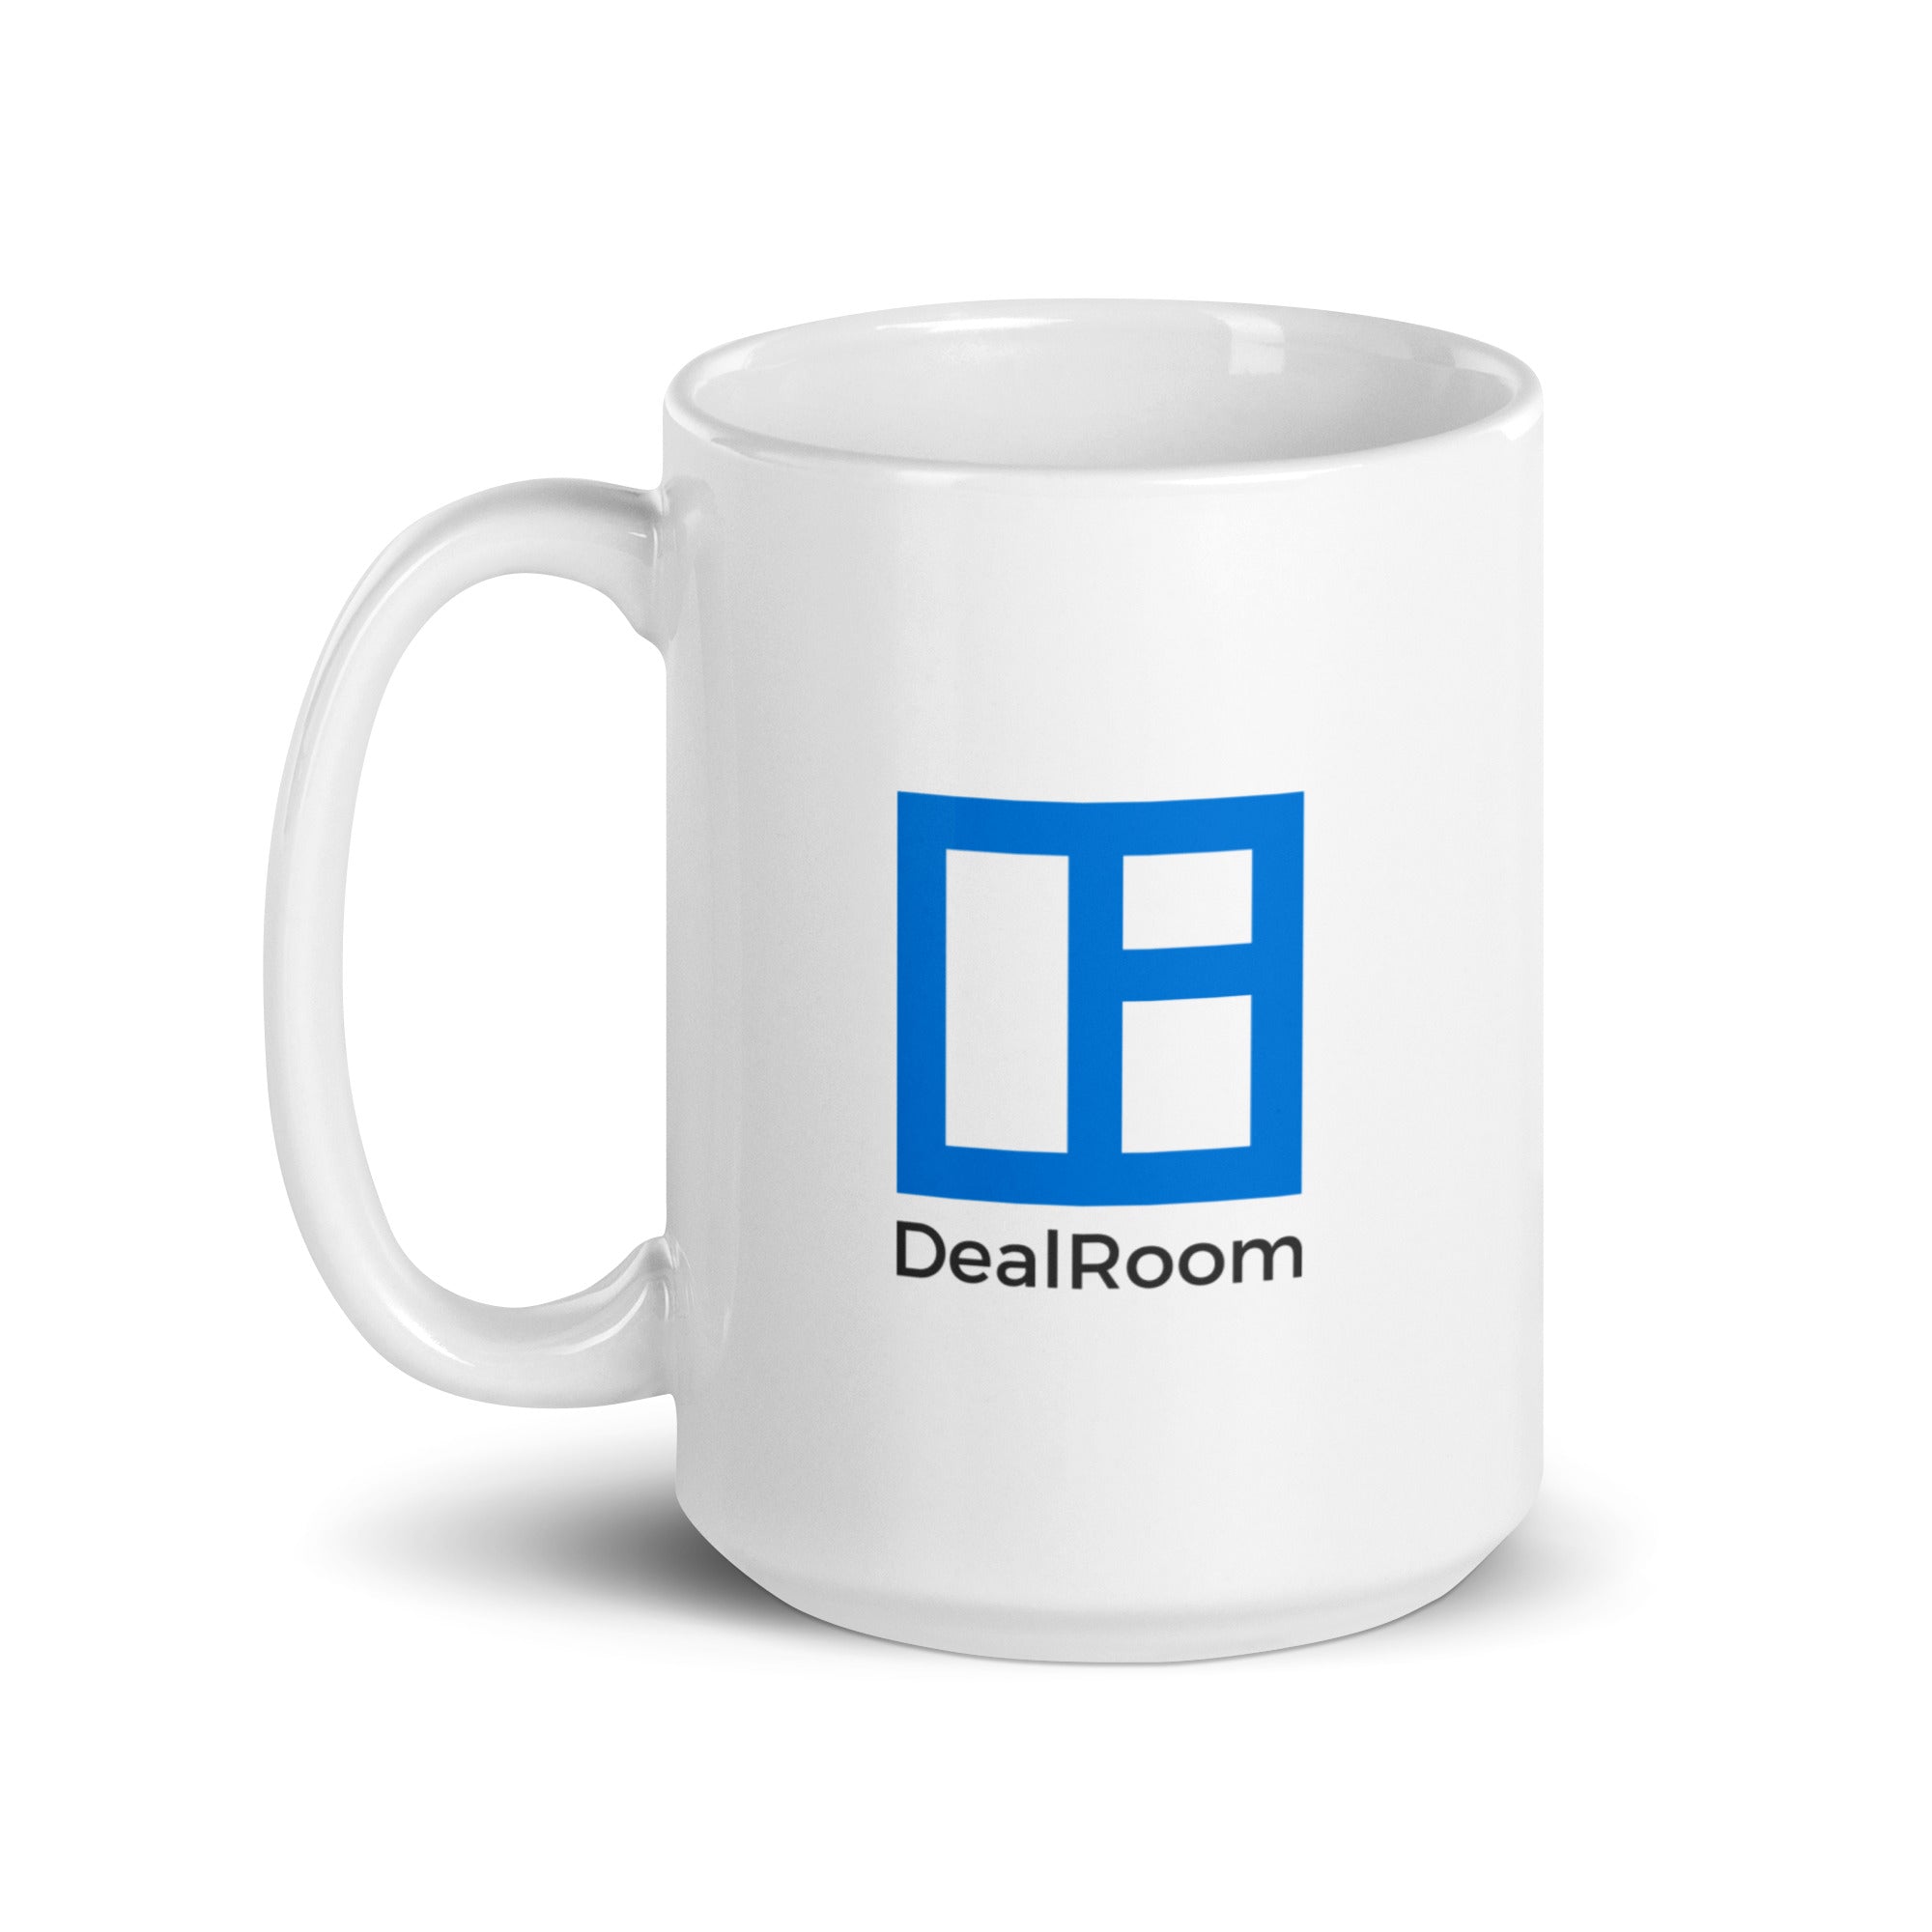 DealRoom White glossy mug